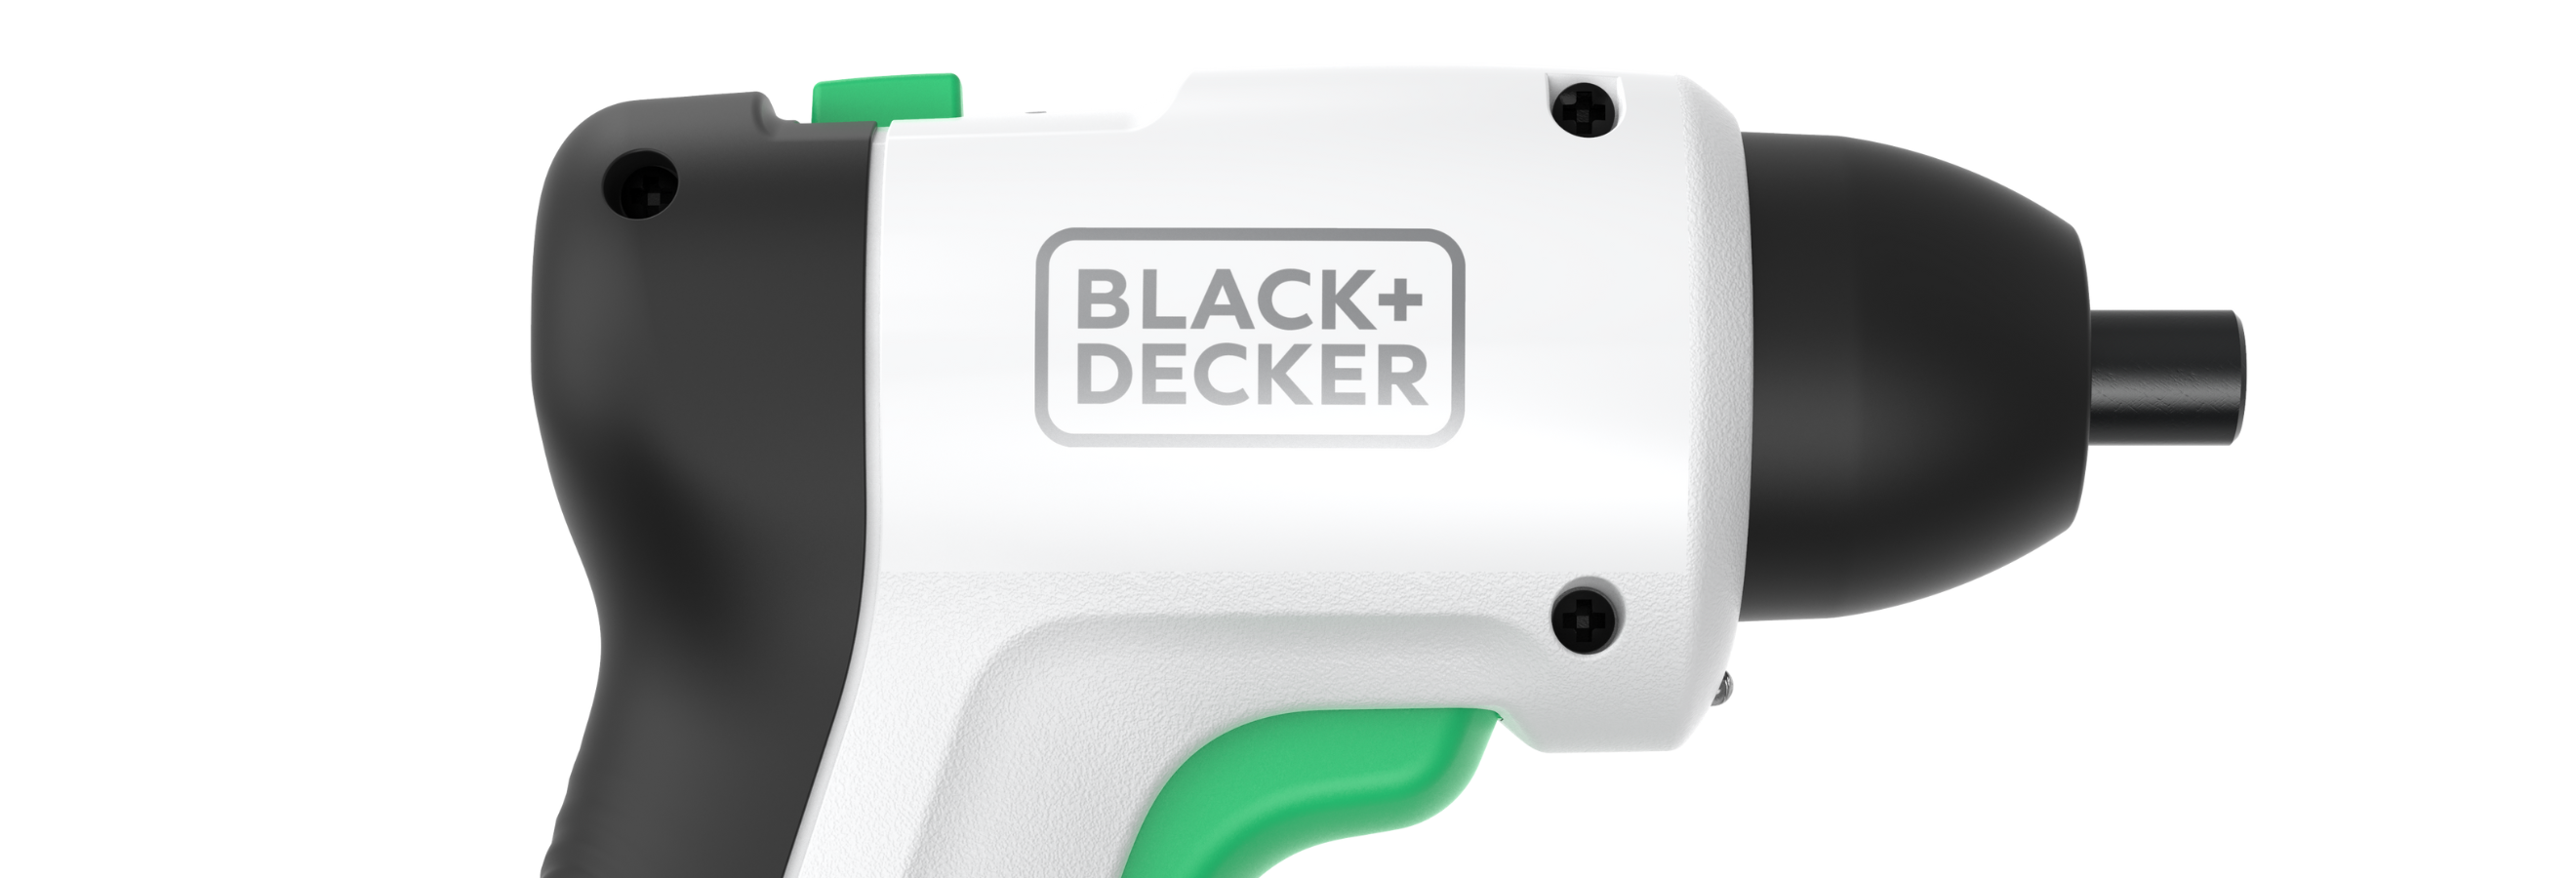 BLACK+DECKER Cordless Screwdriver I For DIY and professional usage 